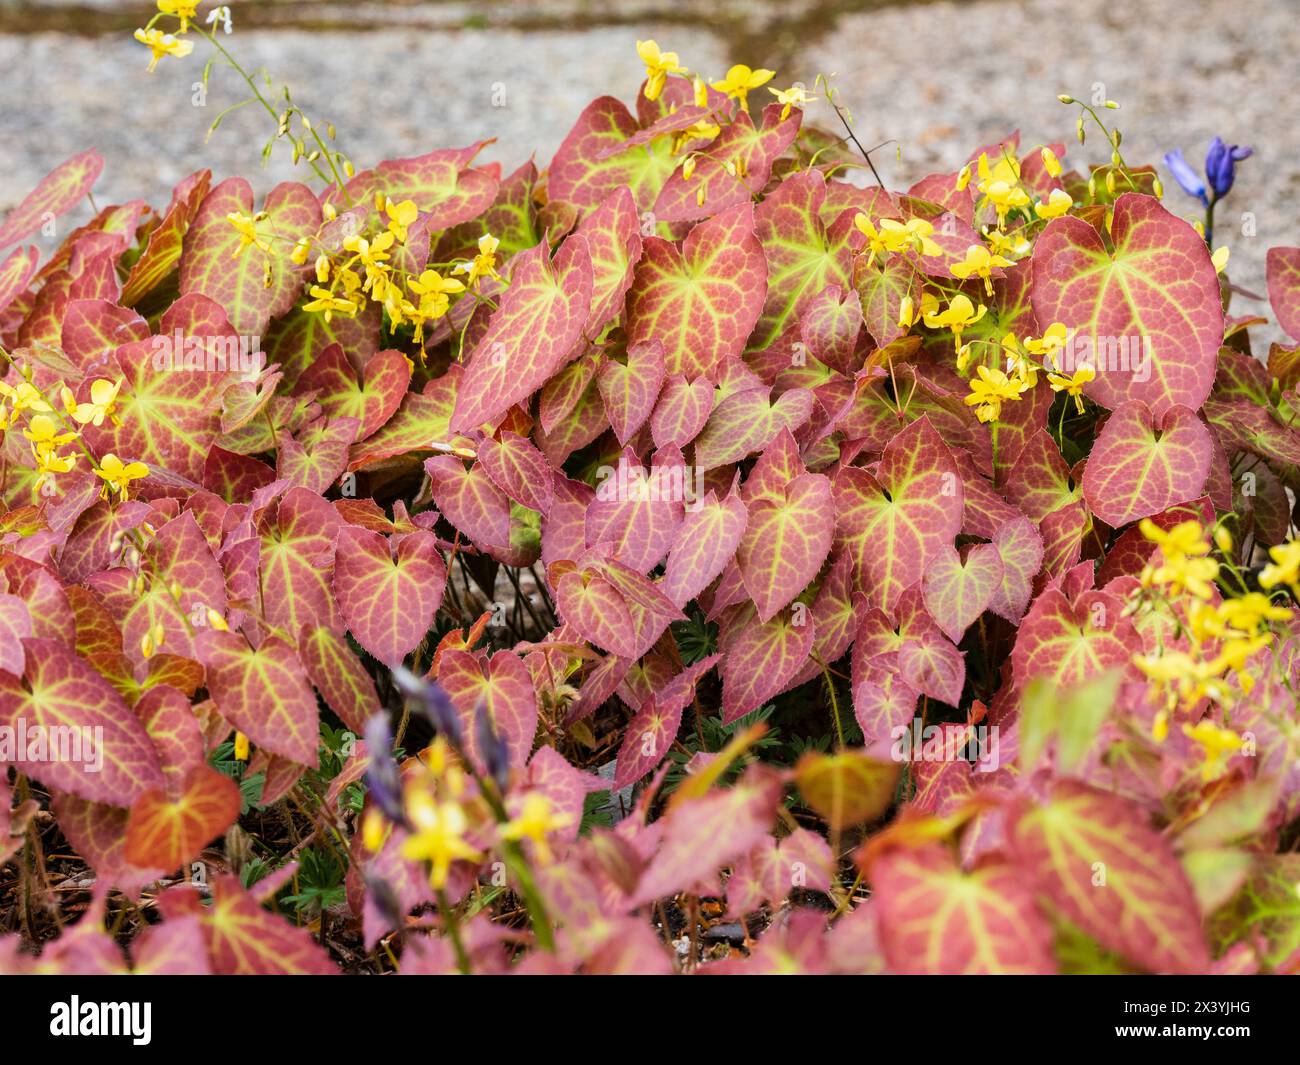 Bronzed spring foliage and yellow flowers of the hardy hybrid barrenwort, Epimedium perralchicum 'Frohnleiten' Stock Photo